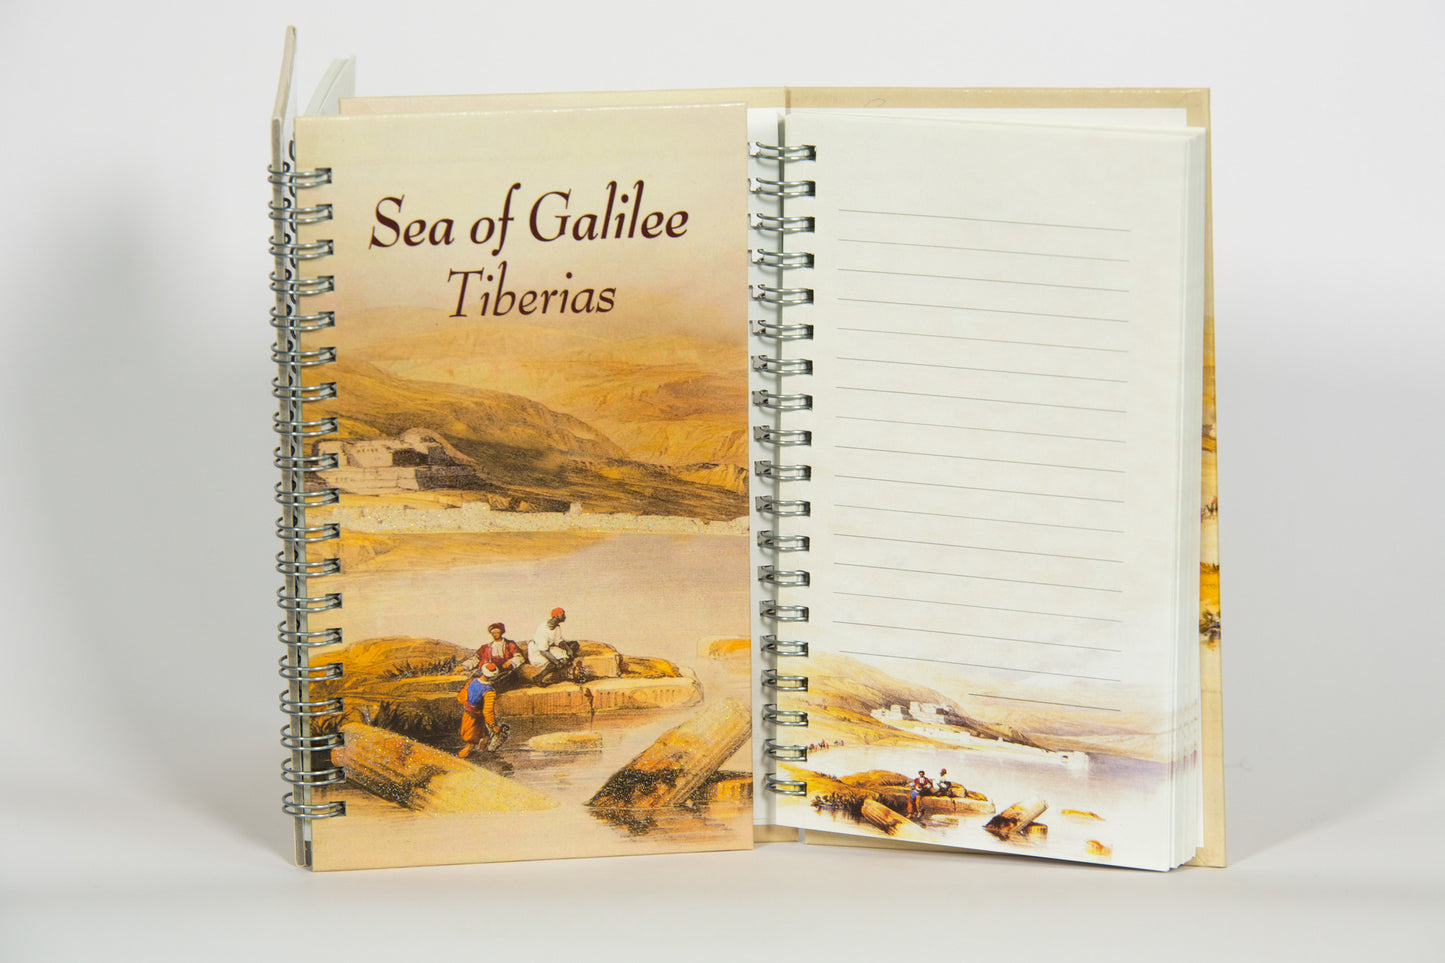 Notebooks: Davids Tower, Golden Gate, Sea of Galilee, Nazareth - souvenirs